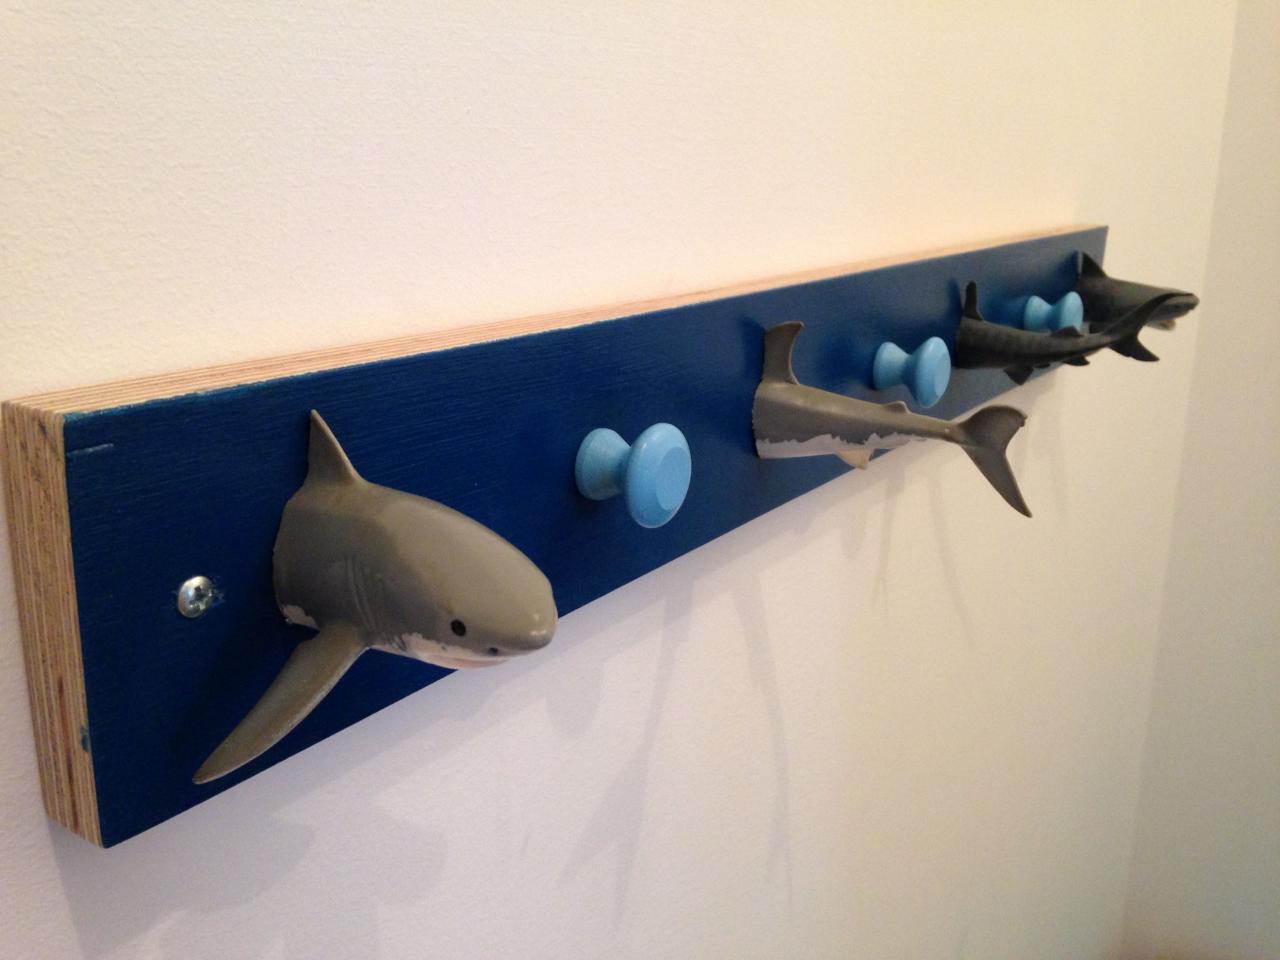 My creation plywood shark hooks for kids bathroom Kid bathroom decor